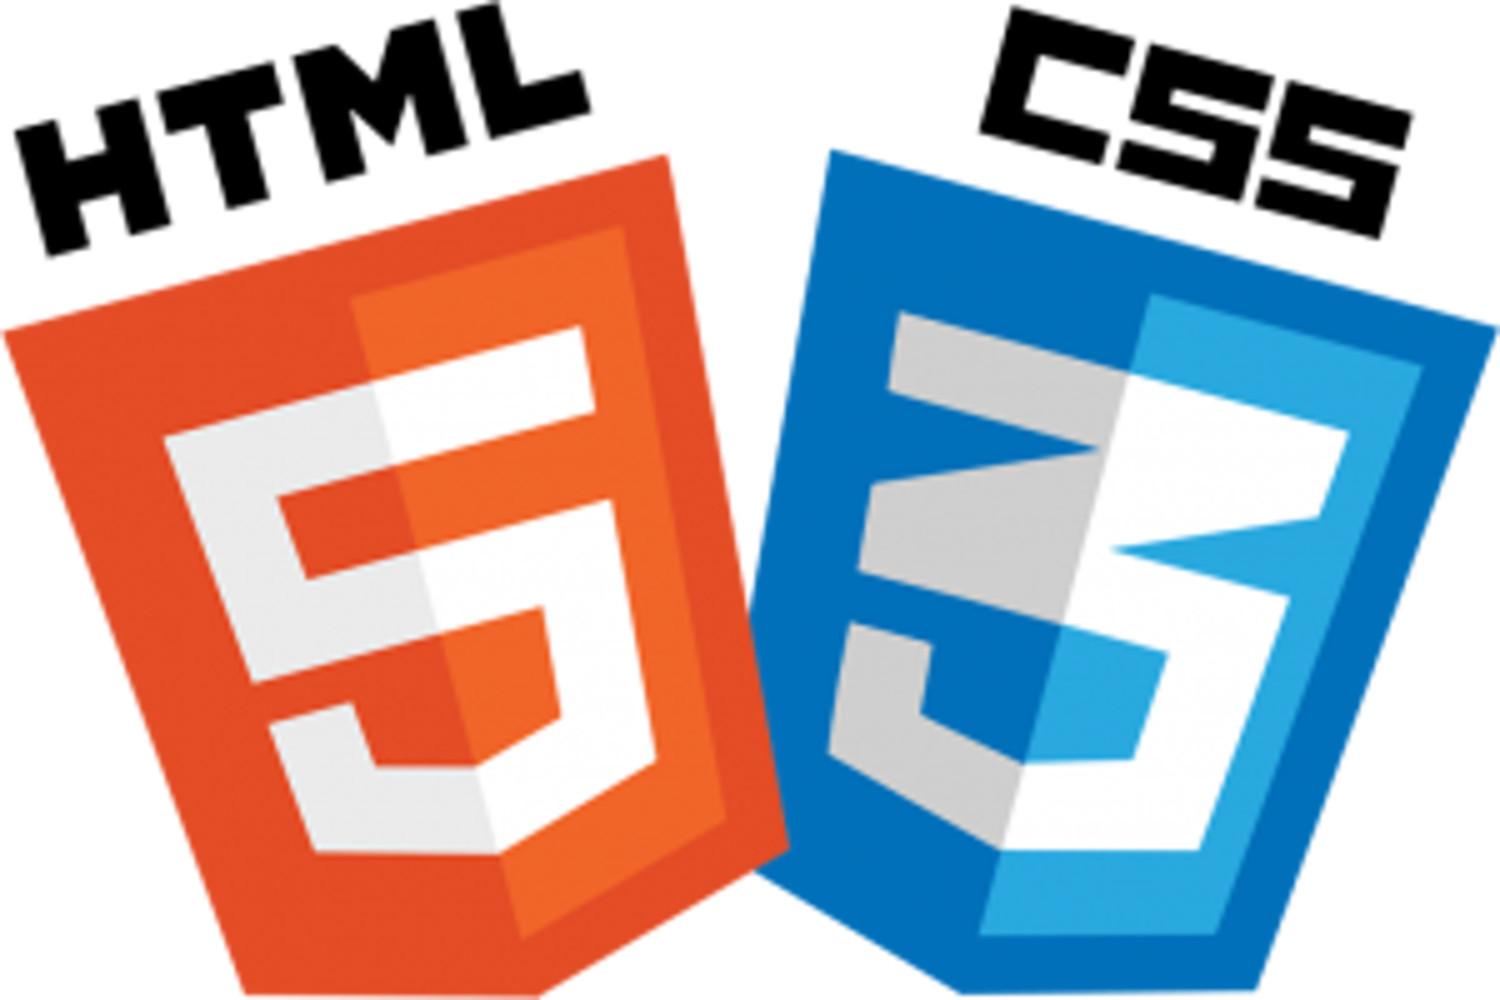 HTMl, CSS ব্যবহার করে অসাধারণ এনিমেশন বাটন তৈরি করুন আপনার ওয়েবসাইটের জন্য।